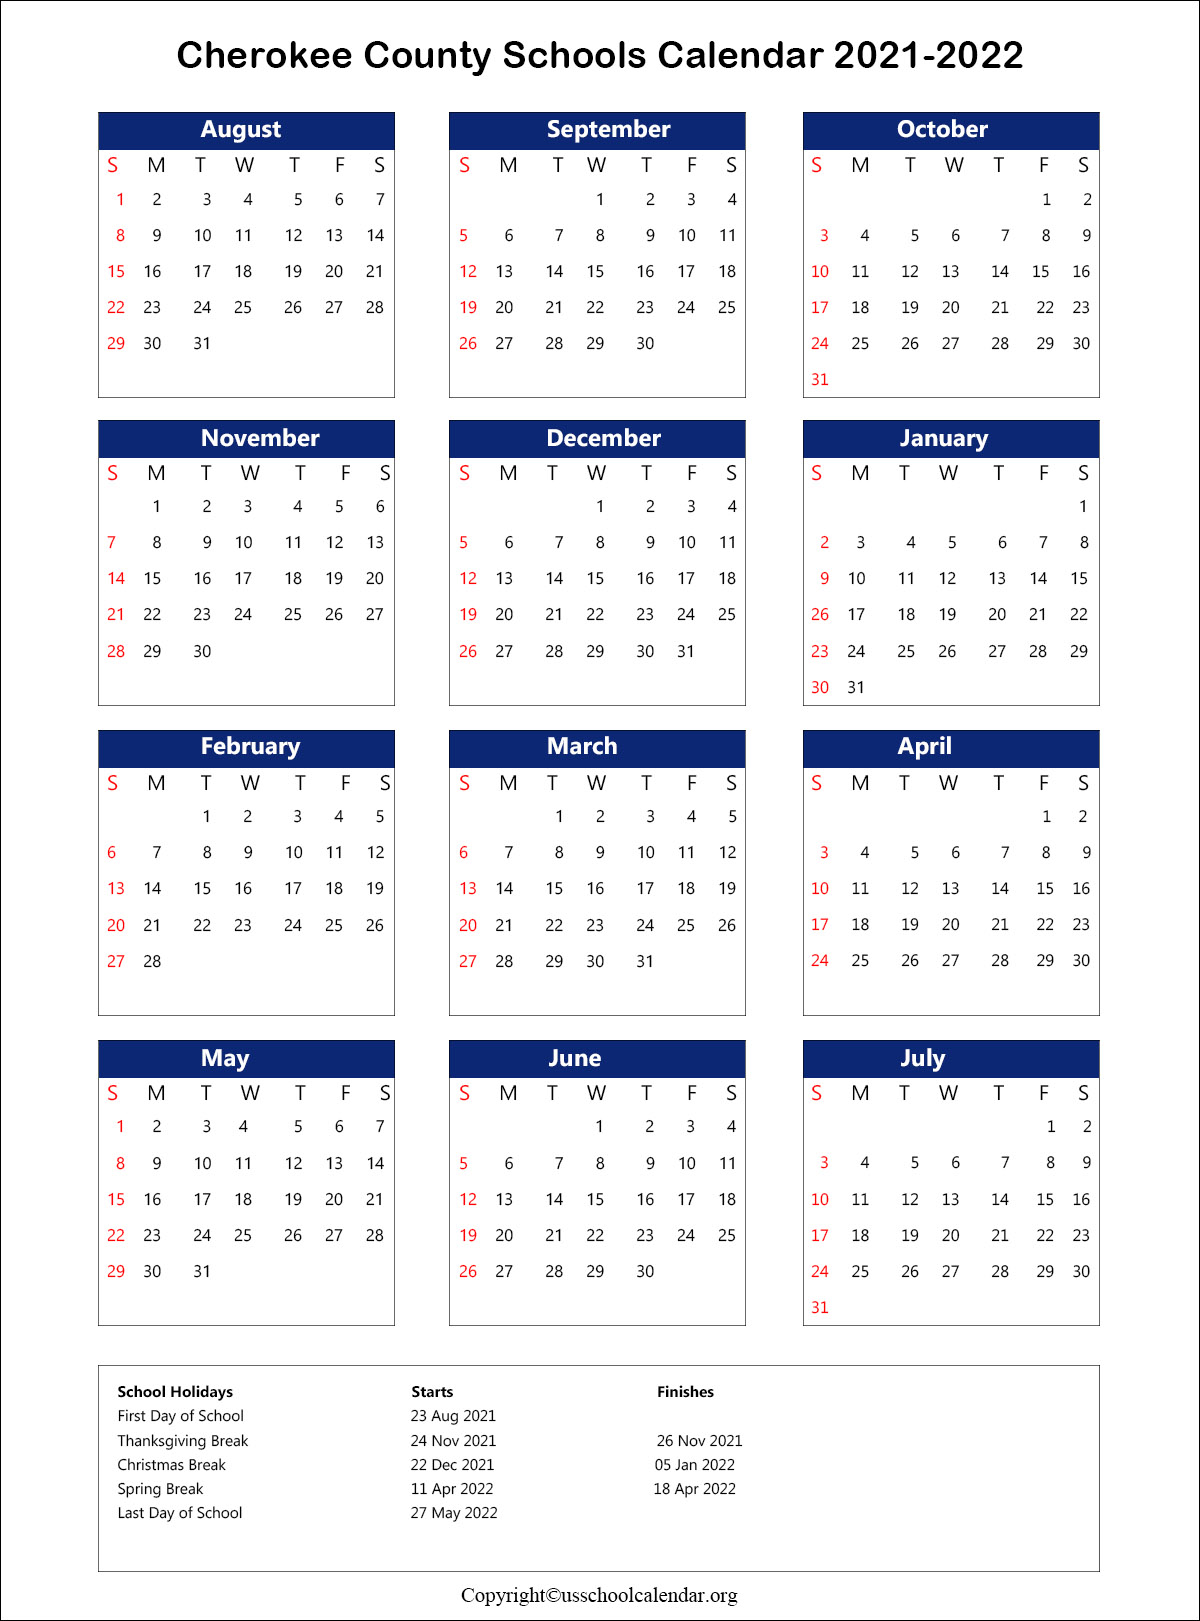 Gwinnett County Calendar 2022 23 Cherokee County School Calendar With Holidays 2021-2022